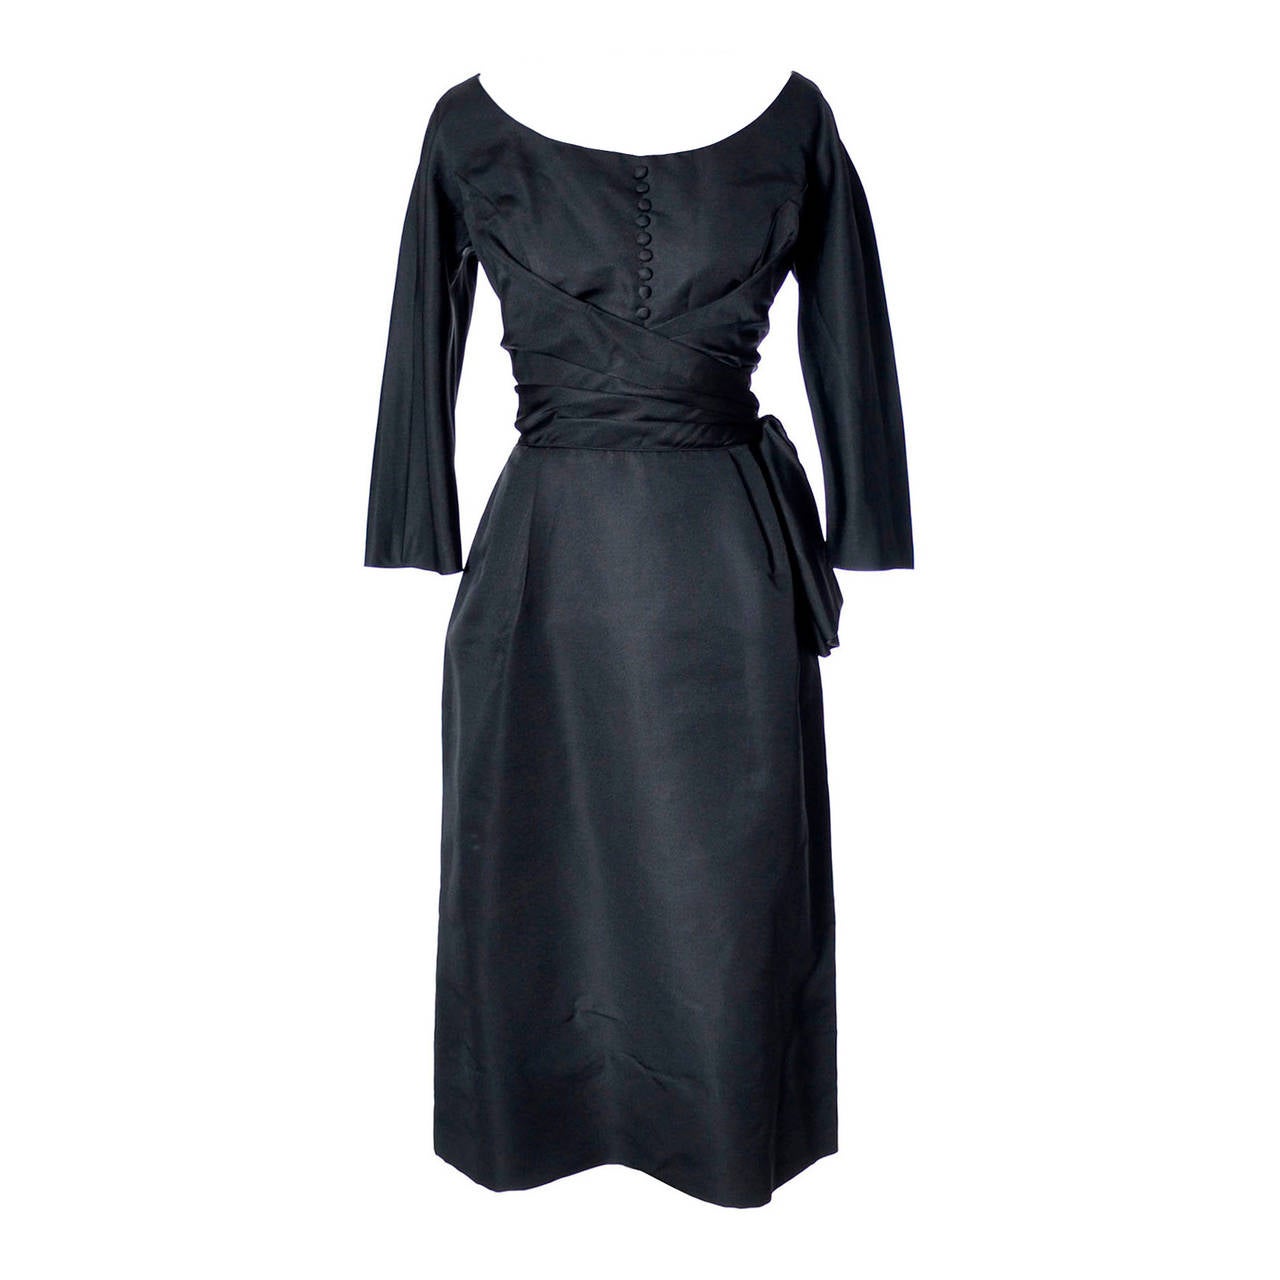 B. Altman & Co Fifth Avenue NY Max Lawrence 1950s Vintage Little Black Dress